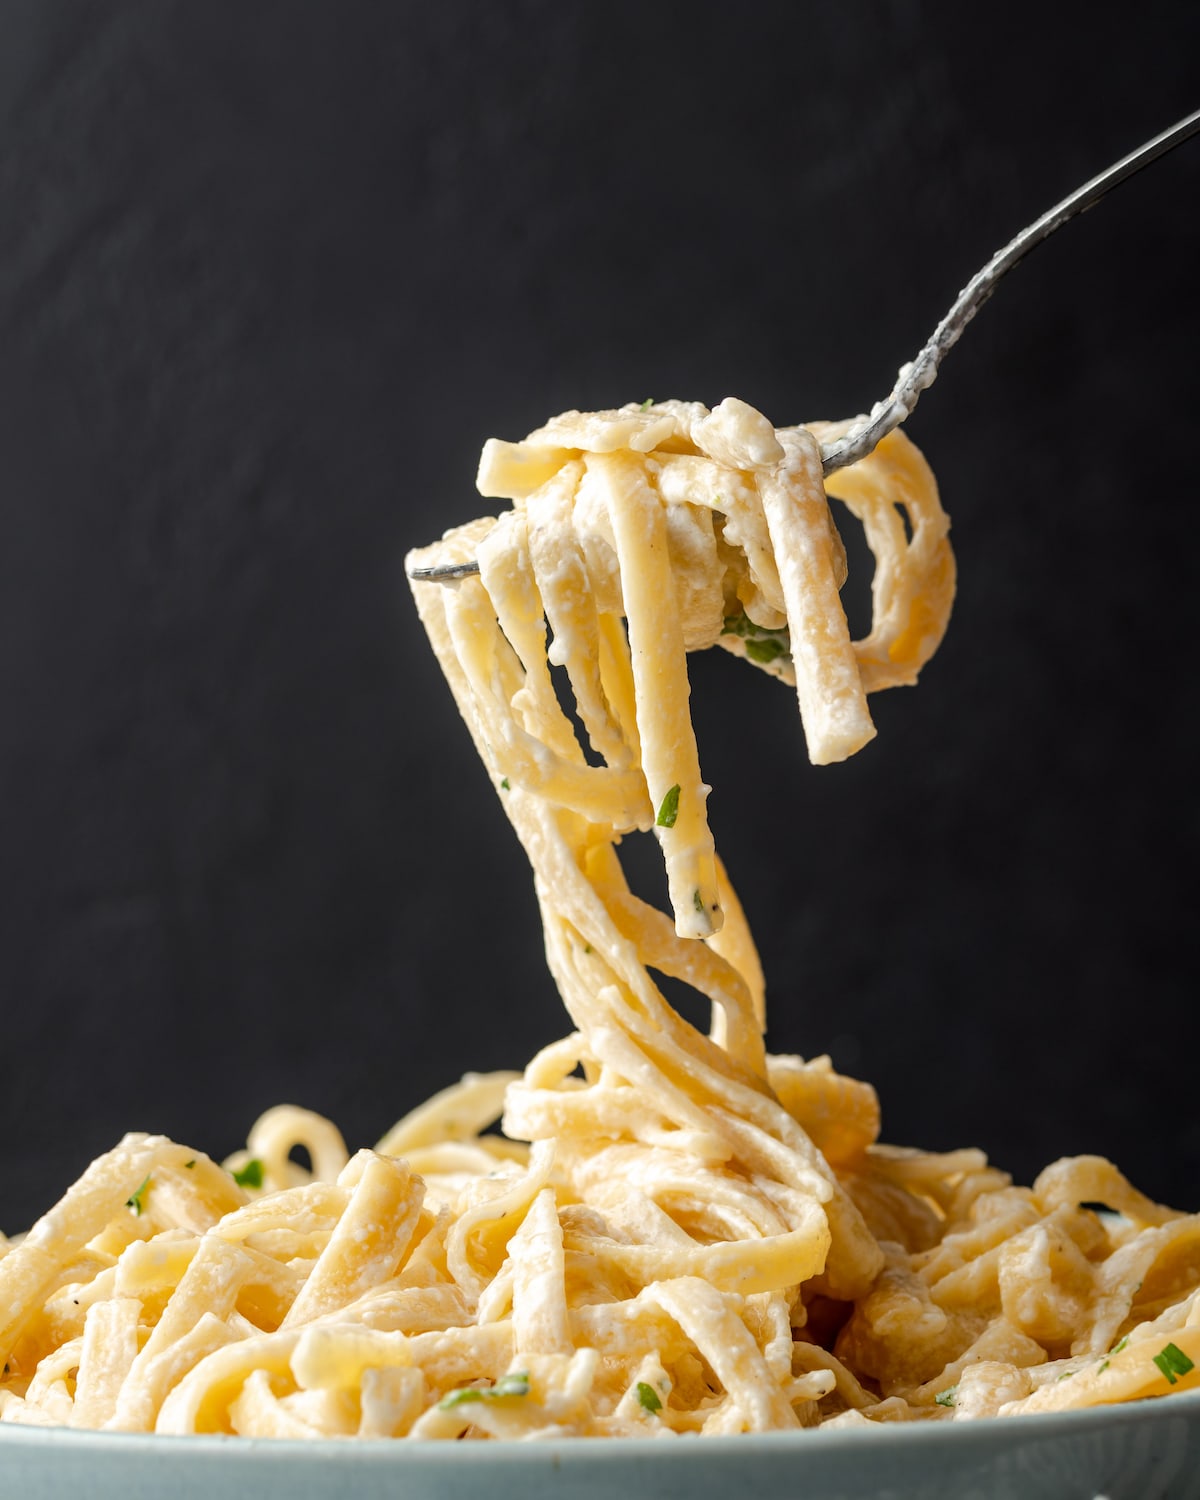 A forkful of fettuccine Alfredo pasta over a bowl of pasta noodles.